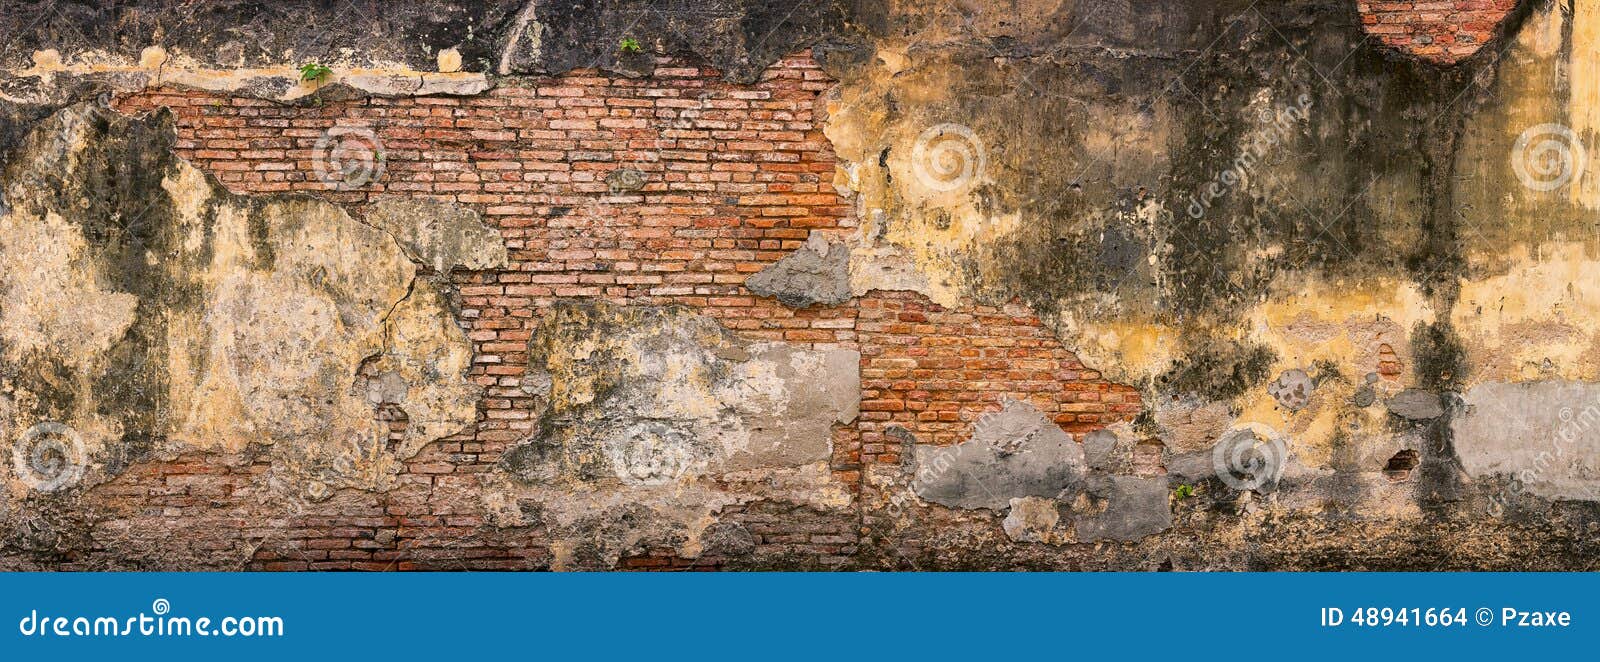 old, crumbling, brick wall in georgetown, penang, malaysia